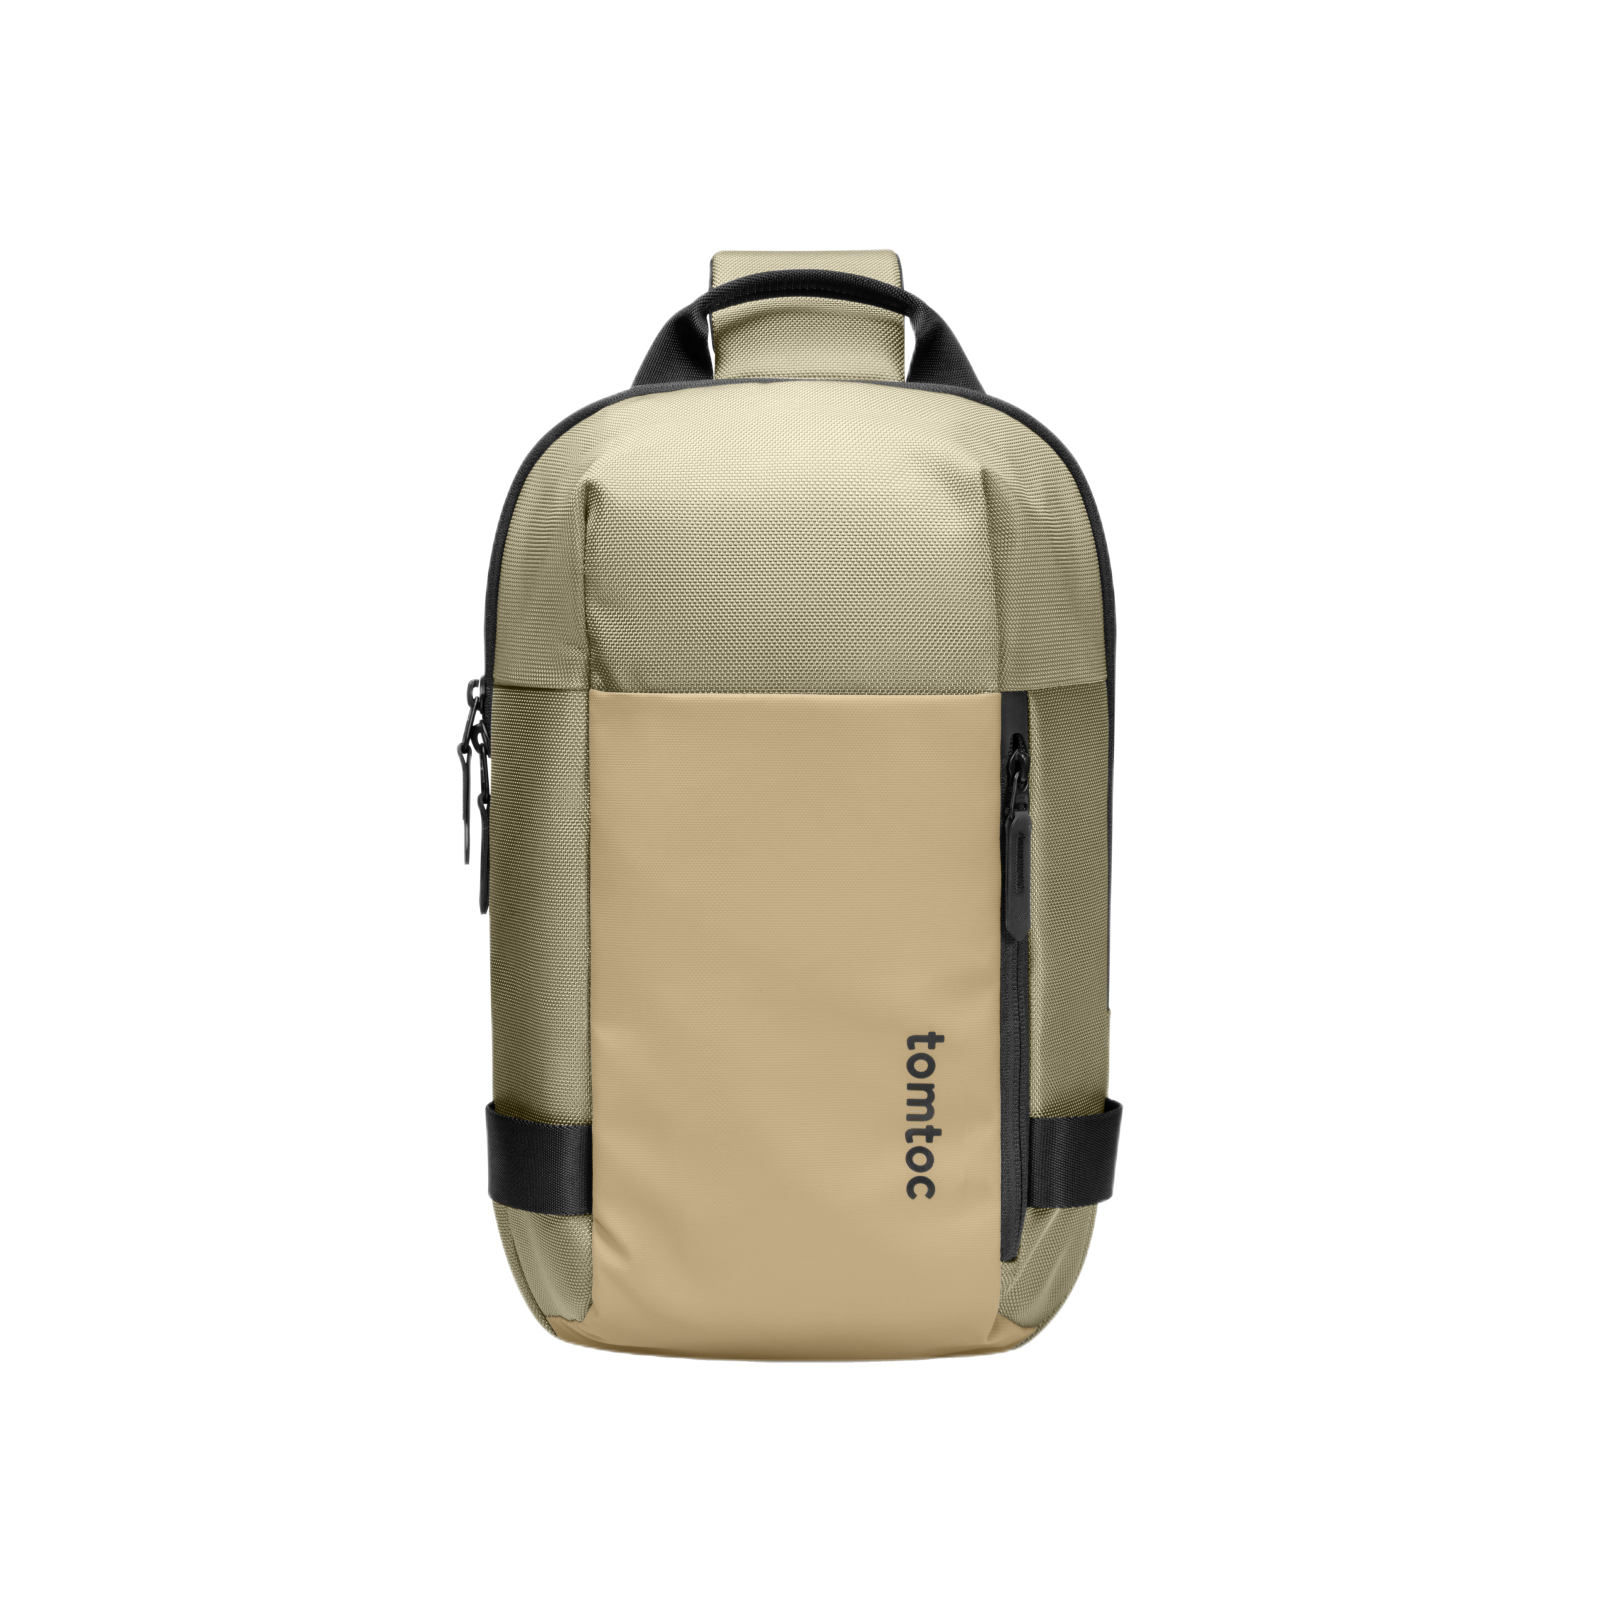 tomtoc 11 Inch Compact Minimalist EDC Sling Bag / Crossbody Bag / Shoulder  Bag - Black